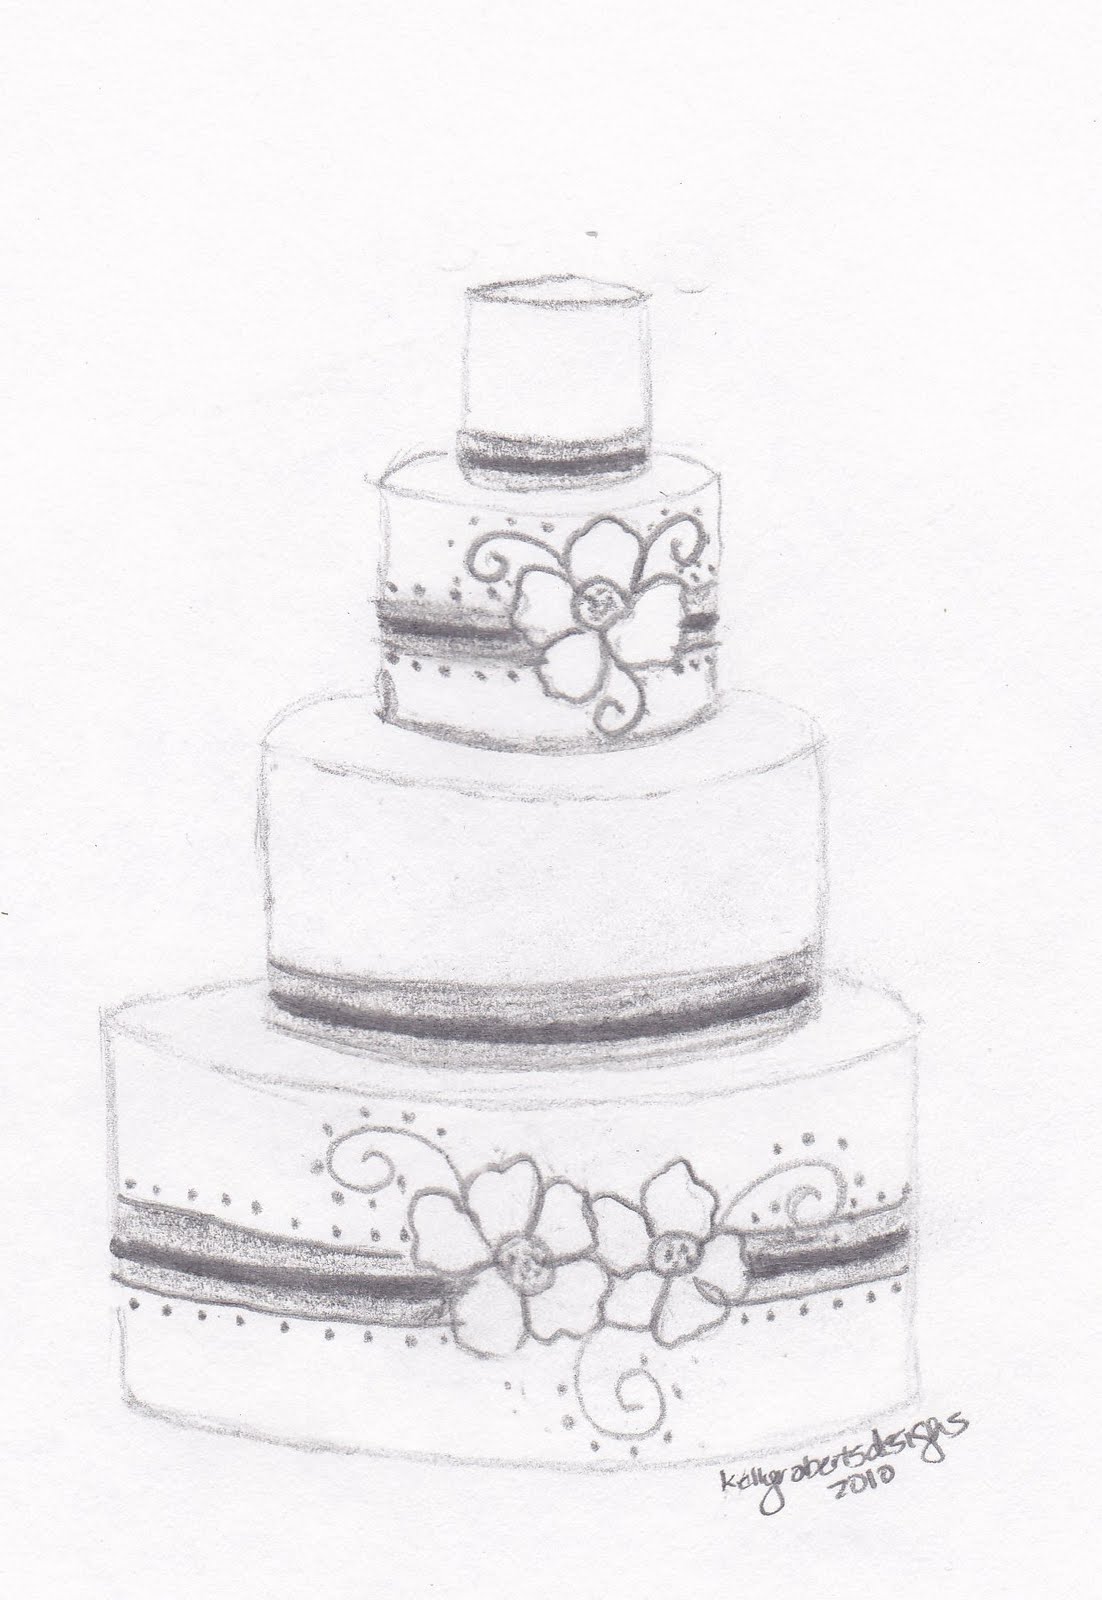 Kelly Roberts Designs: Wedding or Celebration Cake Design Sketches